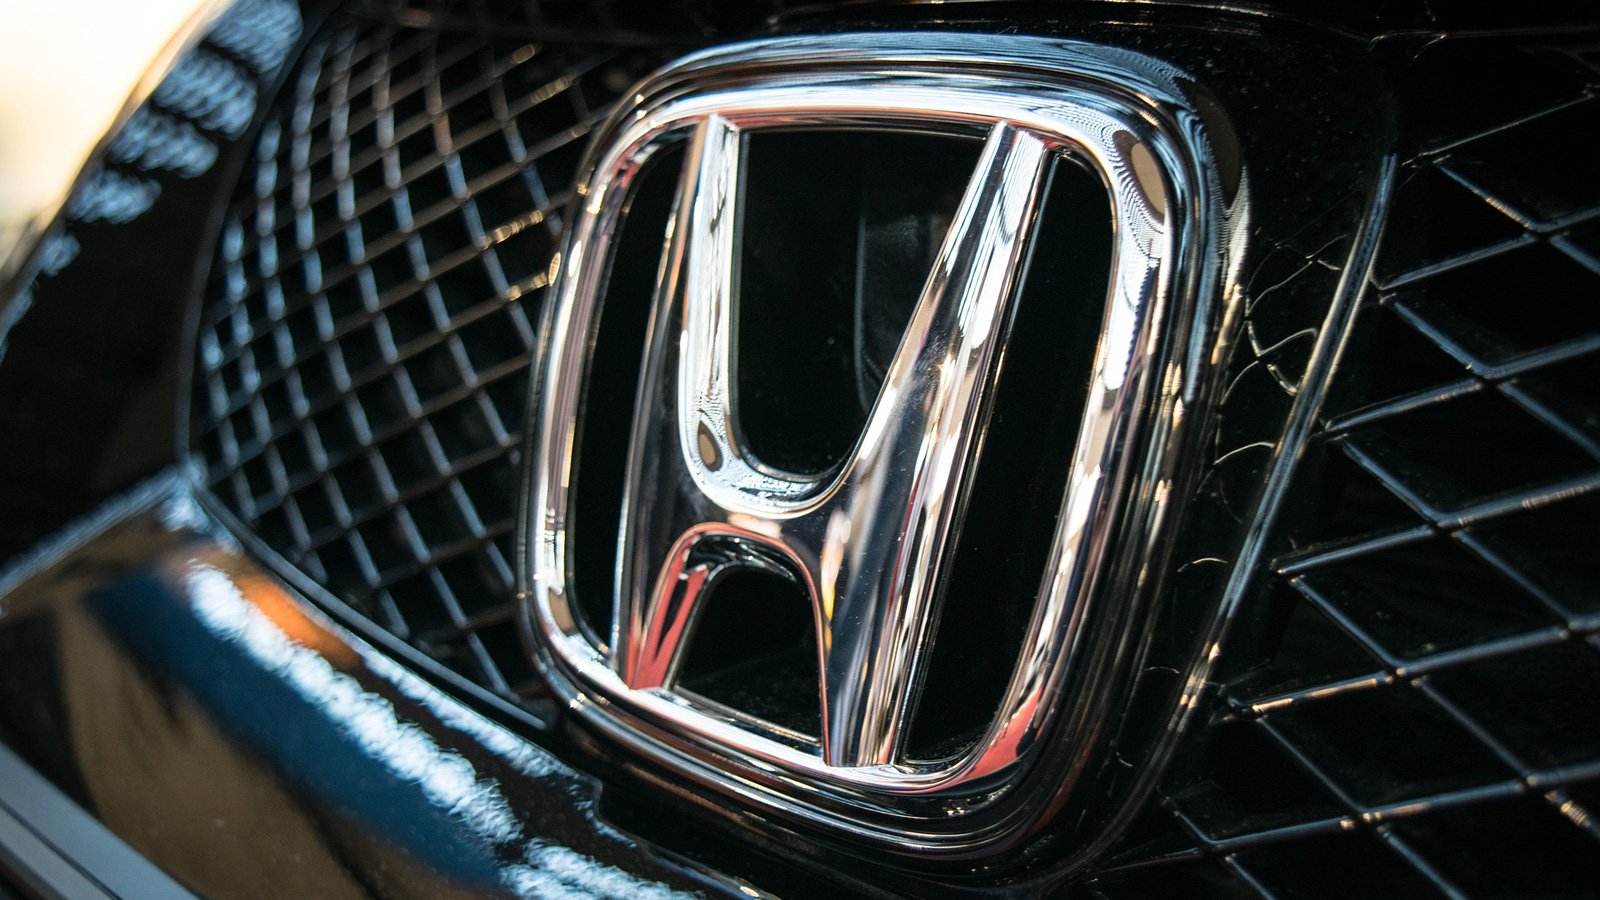 Honda bug lets a hacker unlock and start your car via replay attack